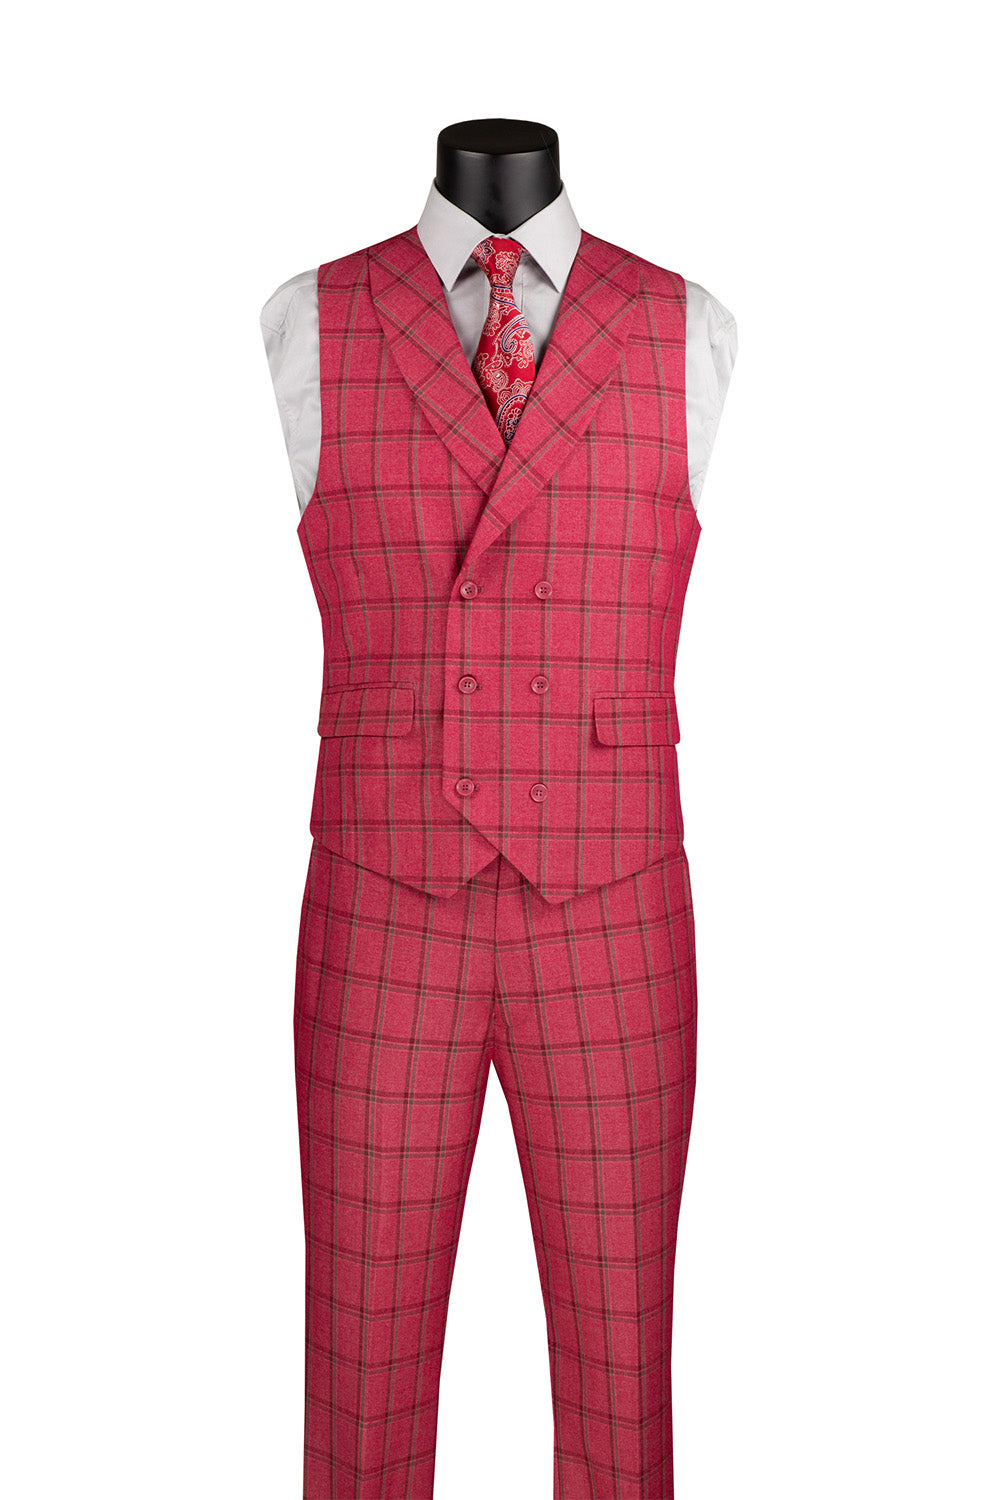 Lazio Collection - Modern Fit Windowpane Suit 3 Piece in Raspberry